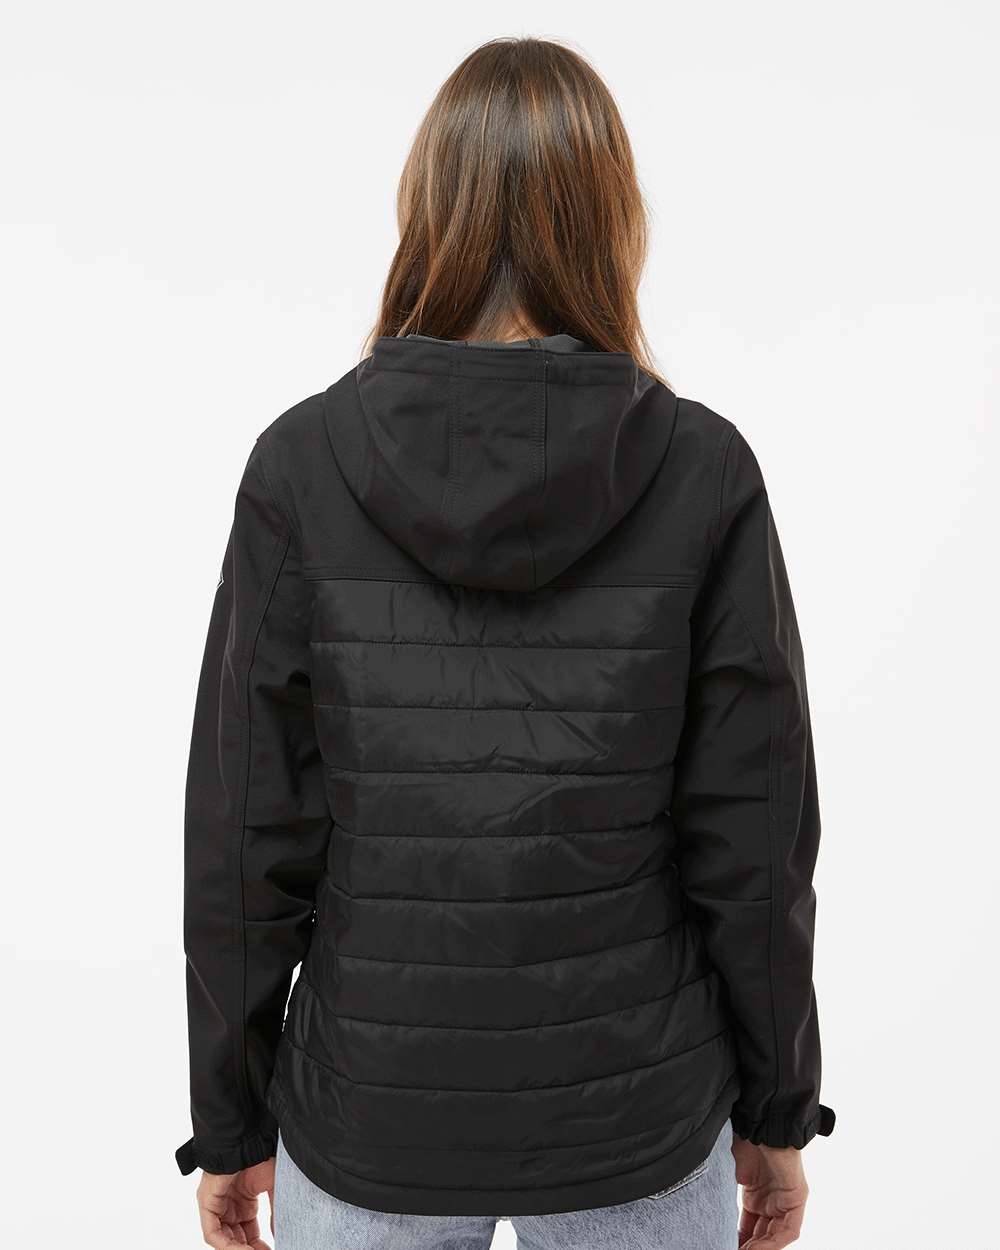 Weatherproof - Women's PillowPac Puffer Jacket - 211137 - Black - Size: XL  